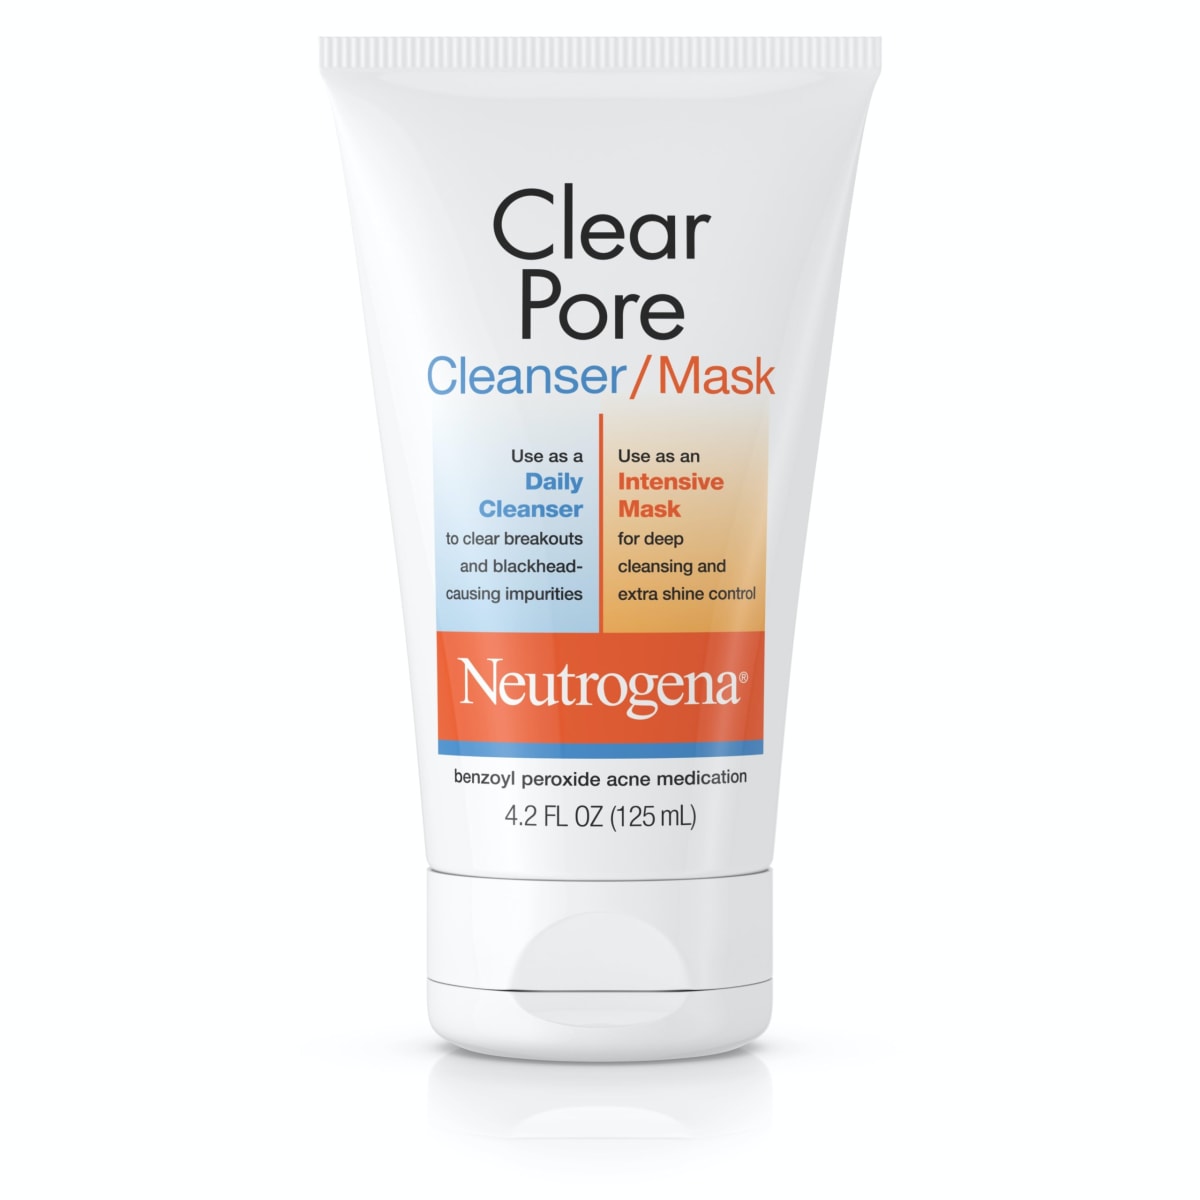 Neutrogena Clear Pore Facial Cleanser/Mask